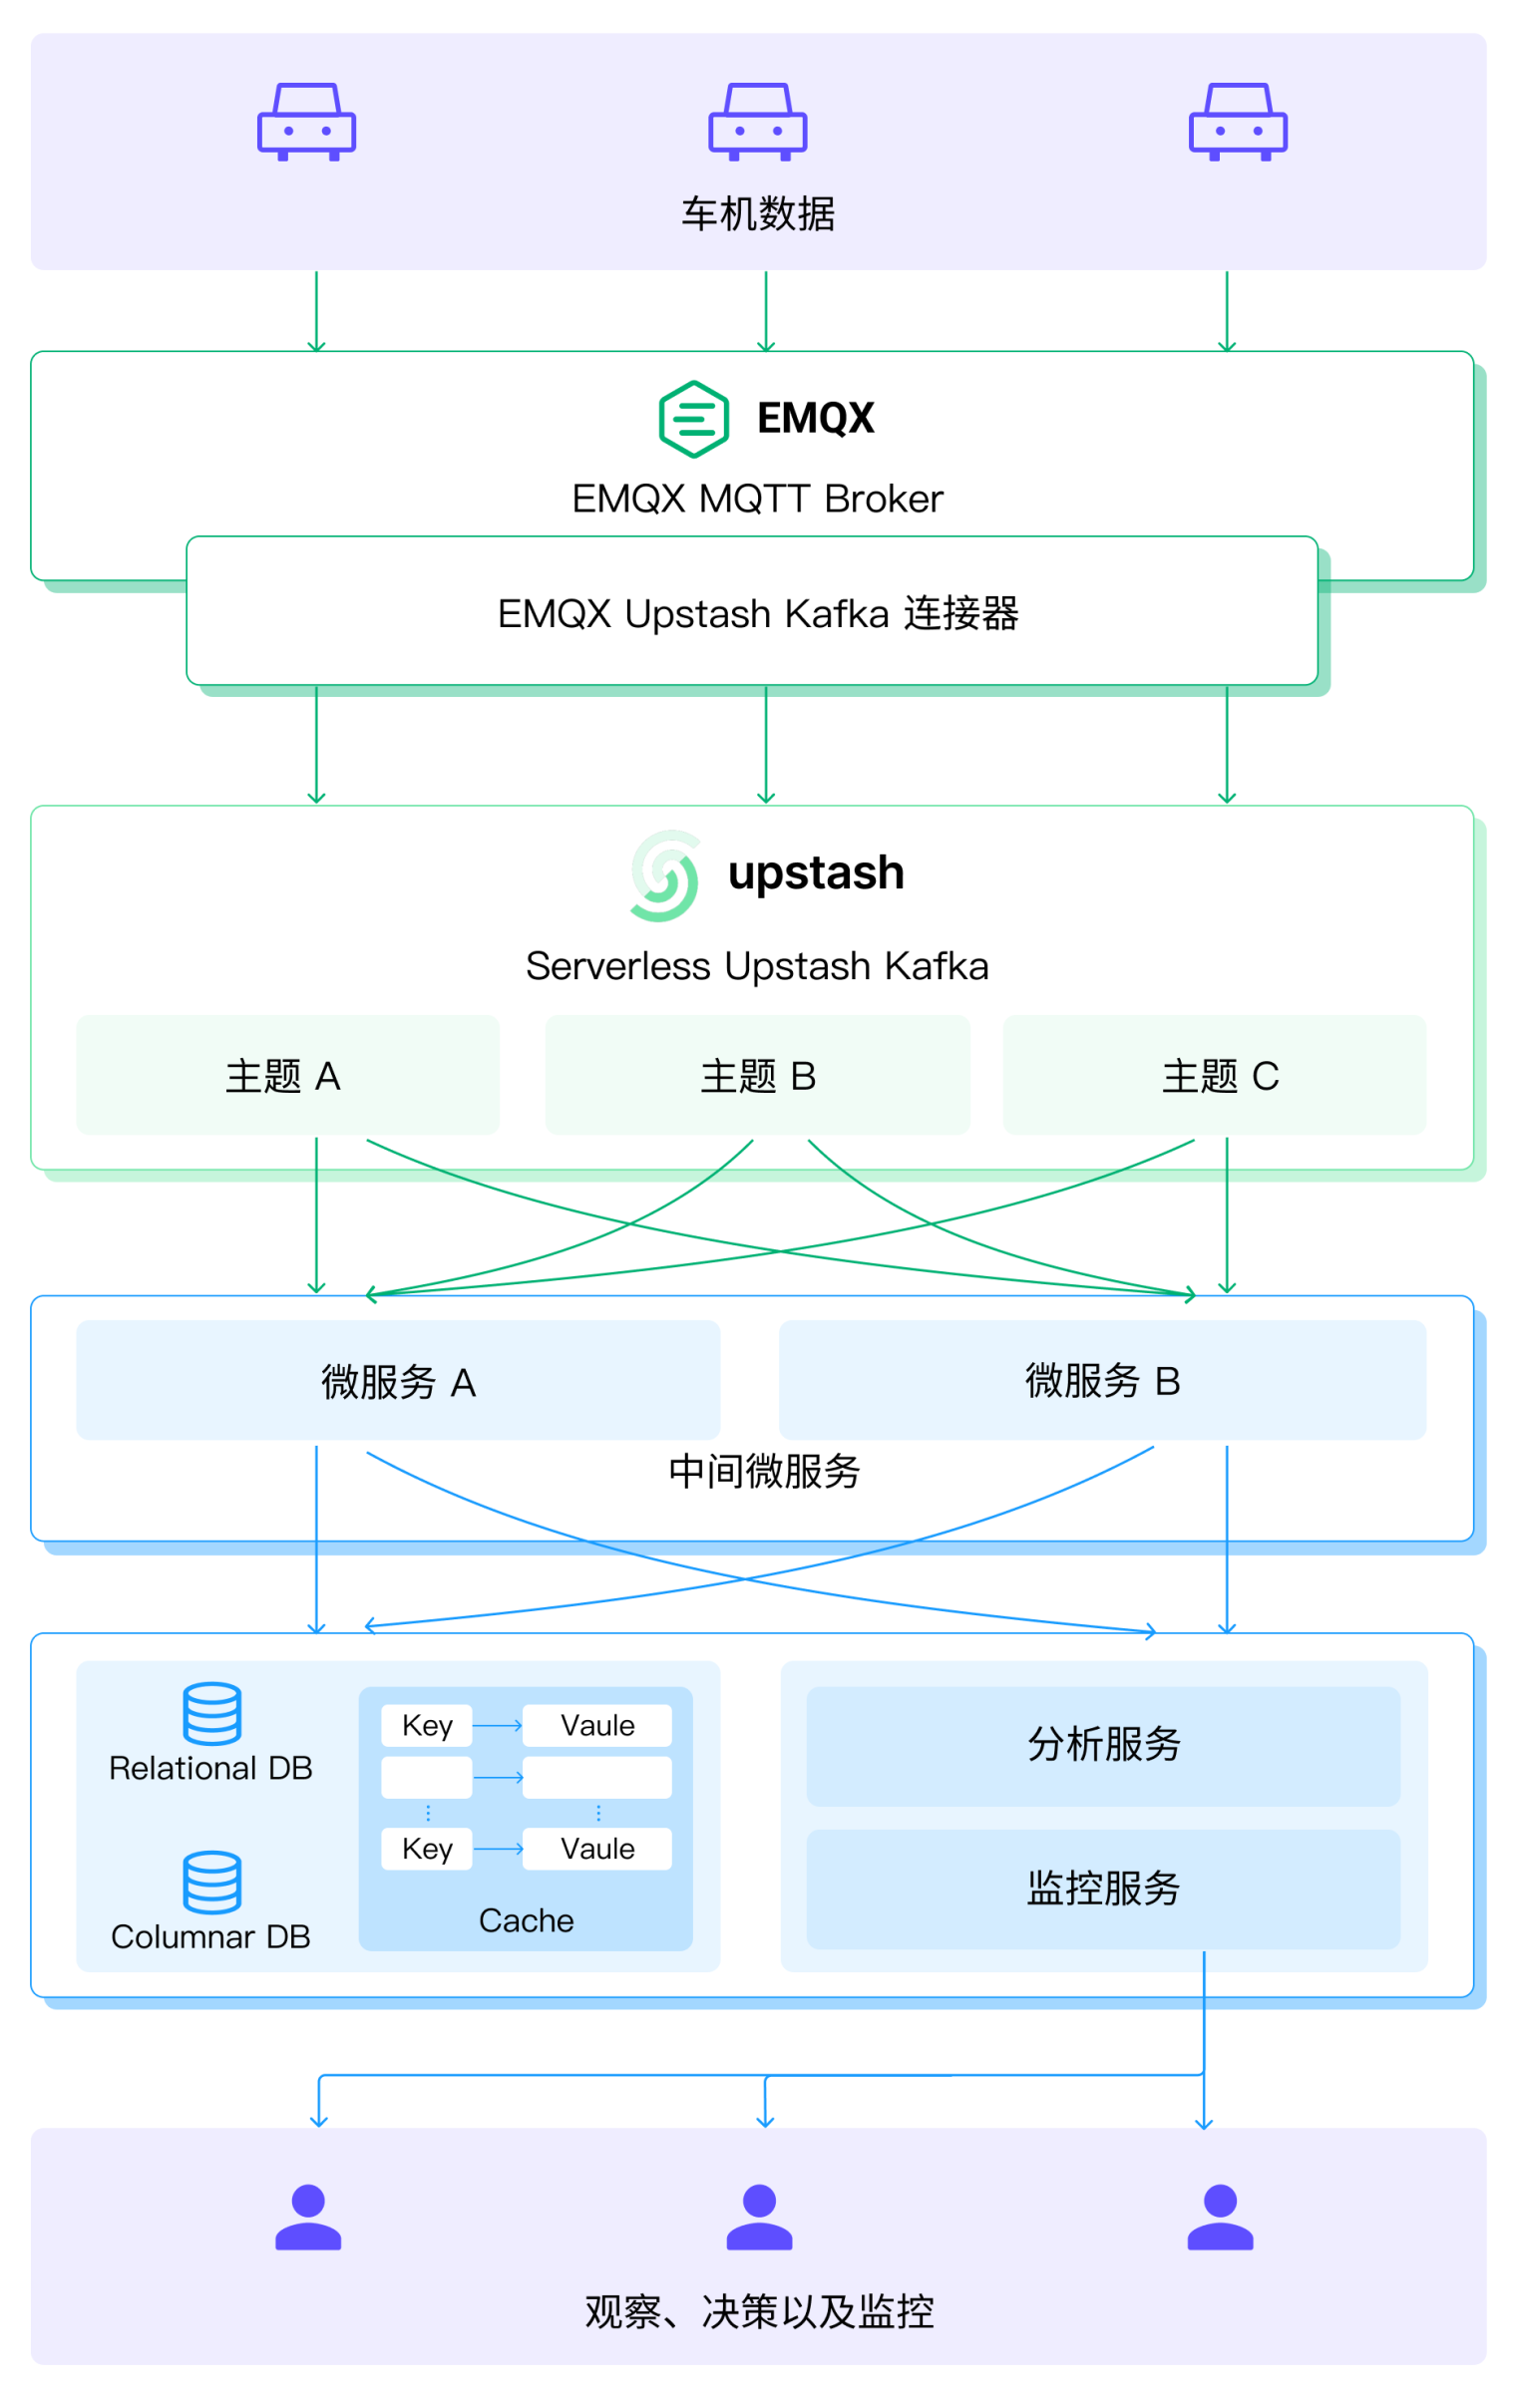 EMQX 与 Upstash 智能网联车平台架构图